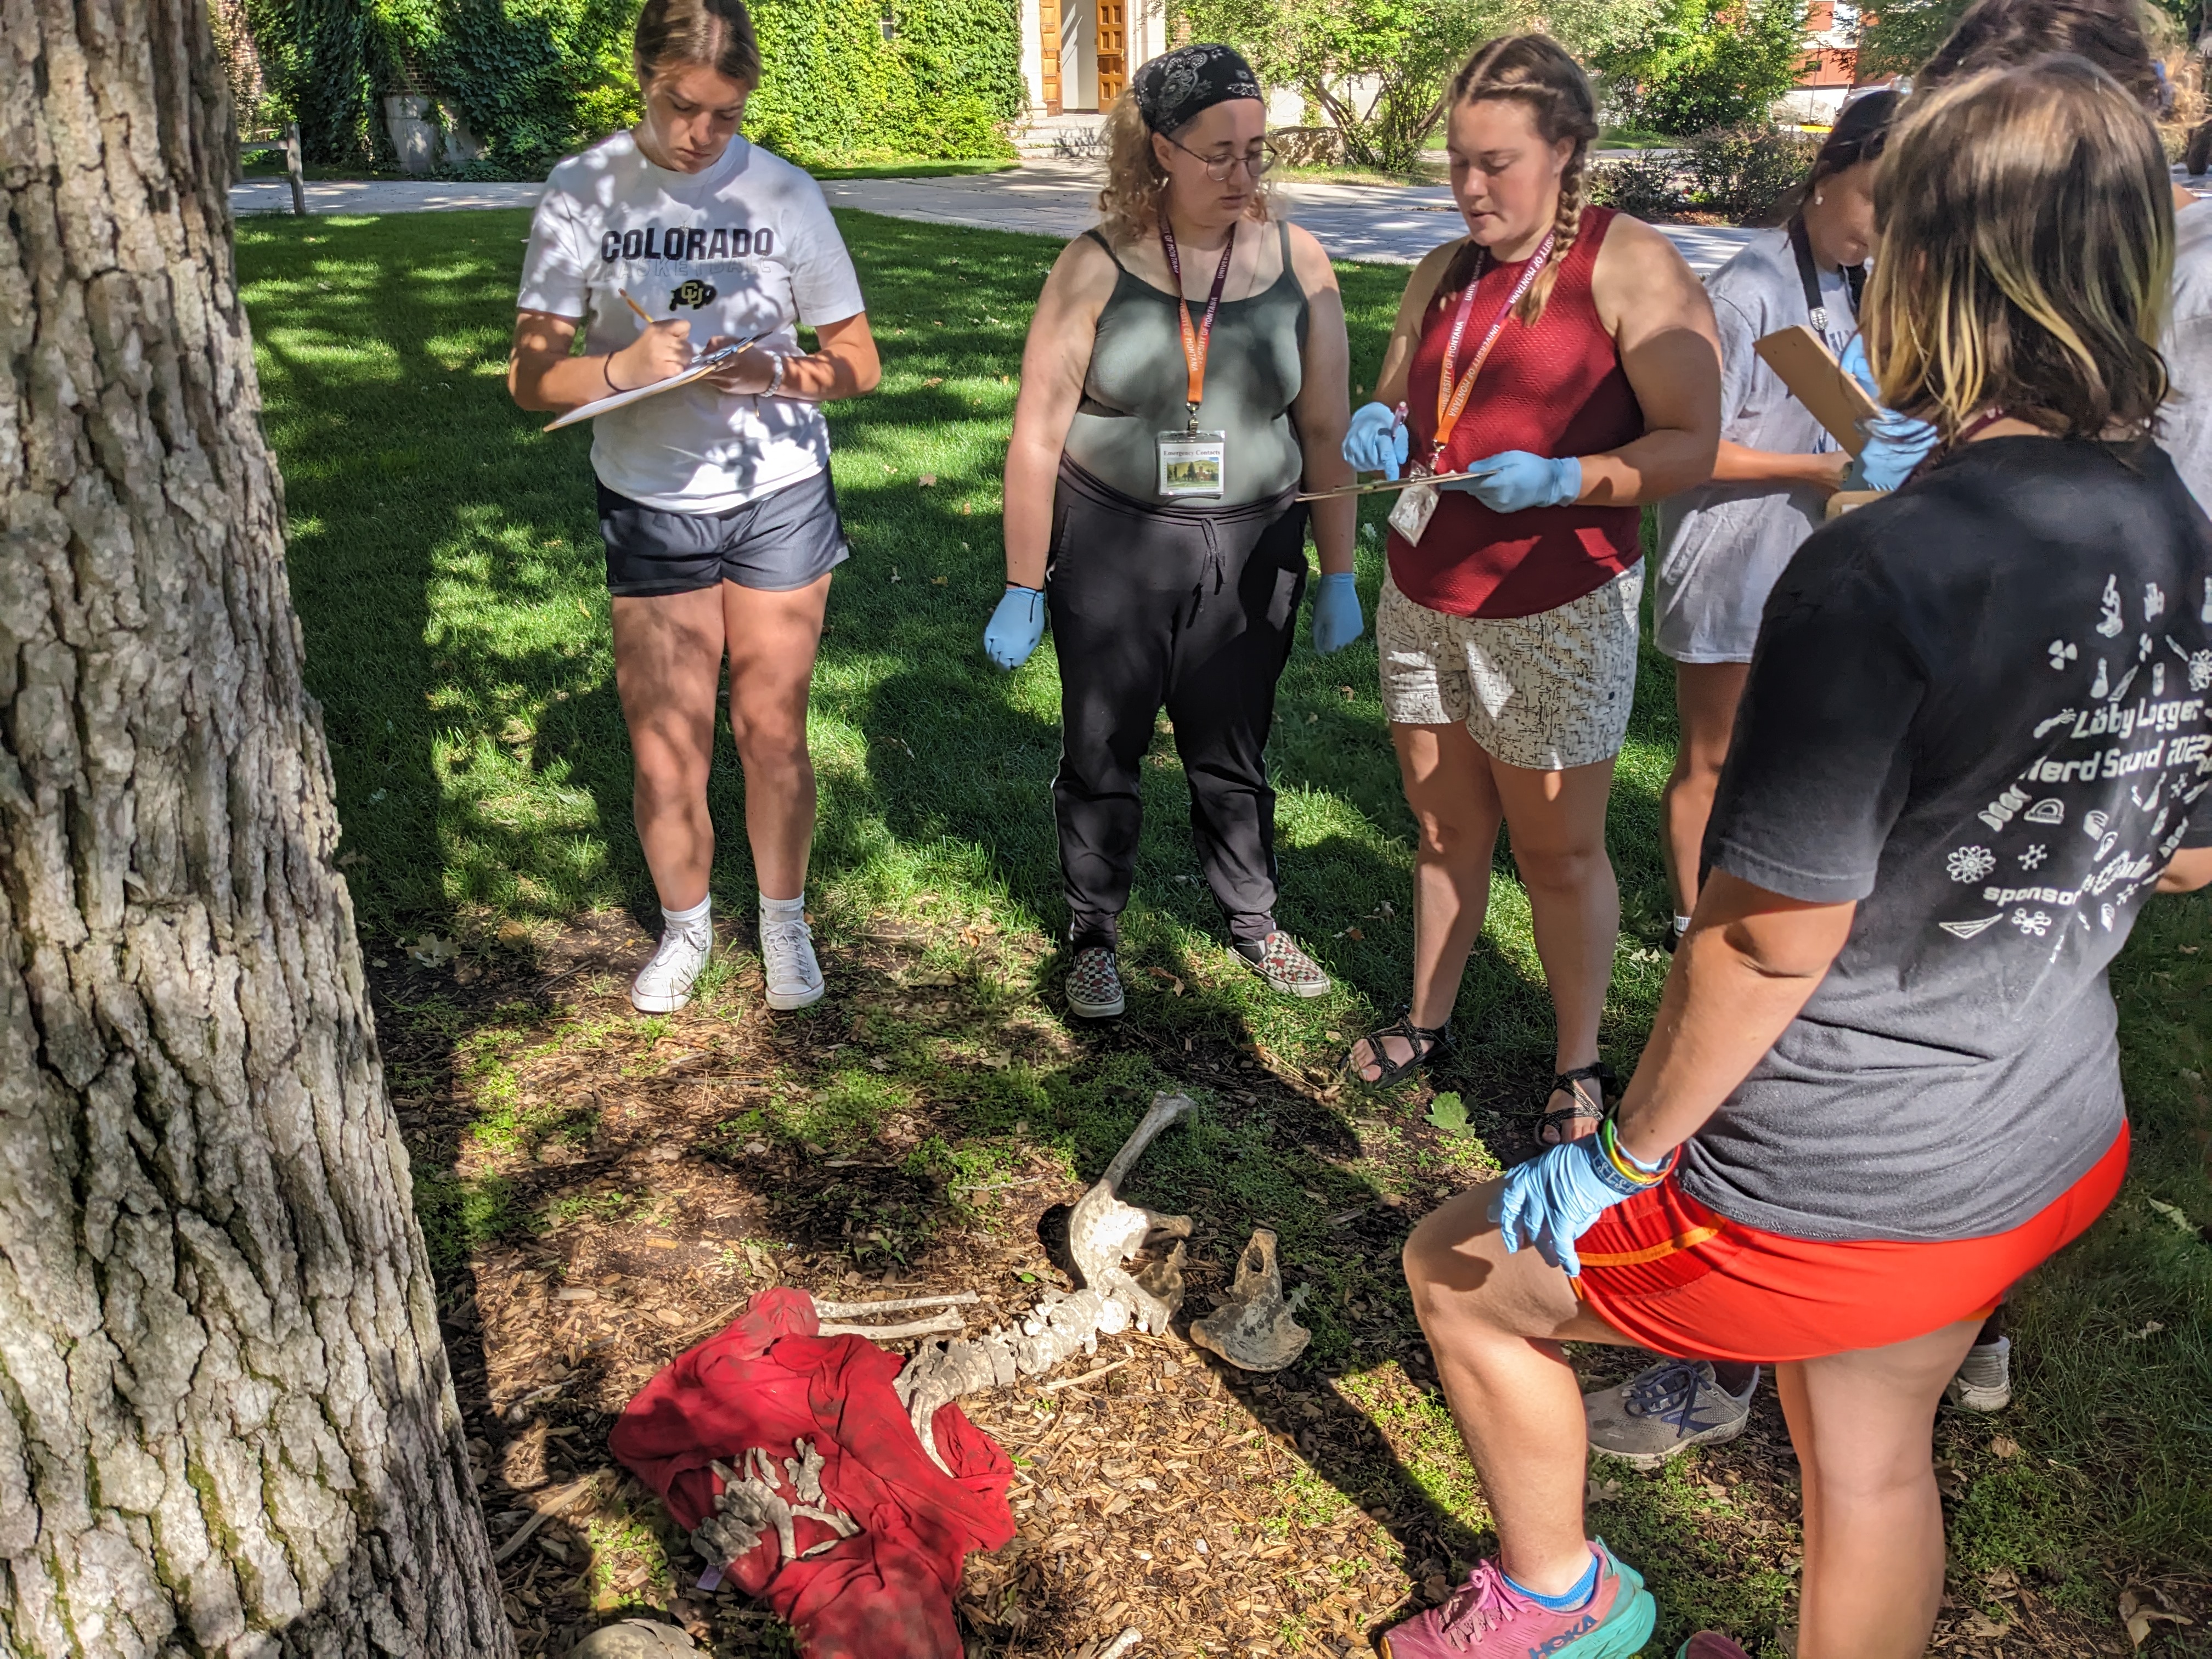 Group of students make observations of fake skeletal remains on ground.